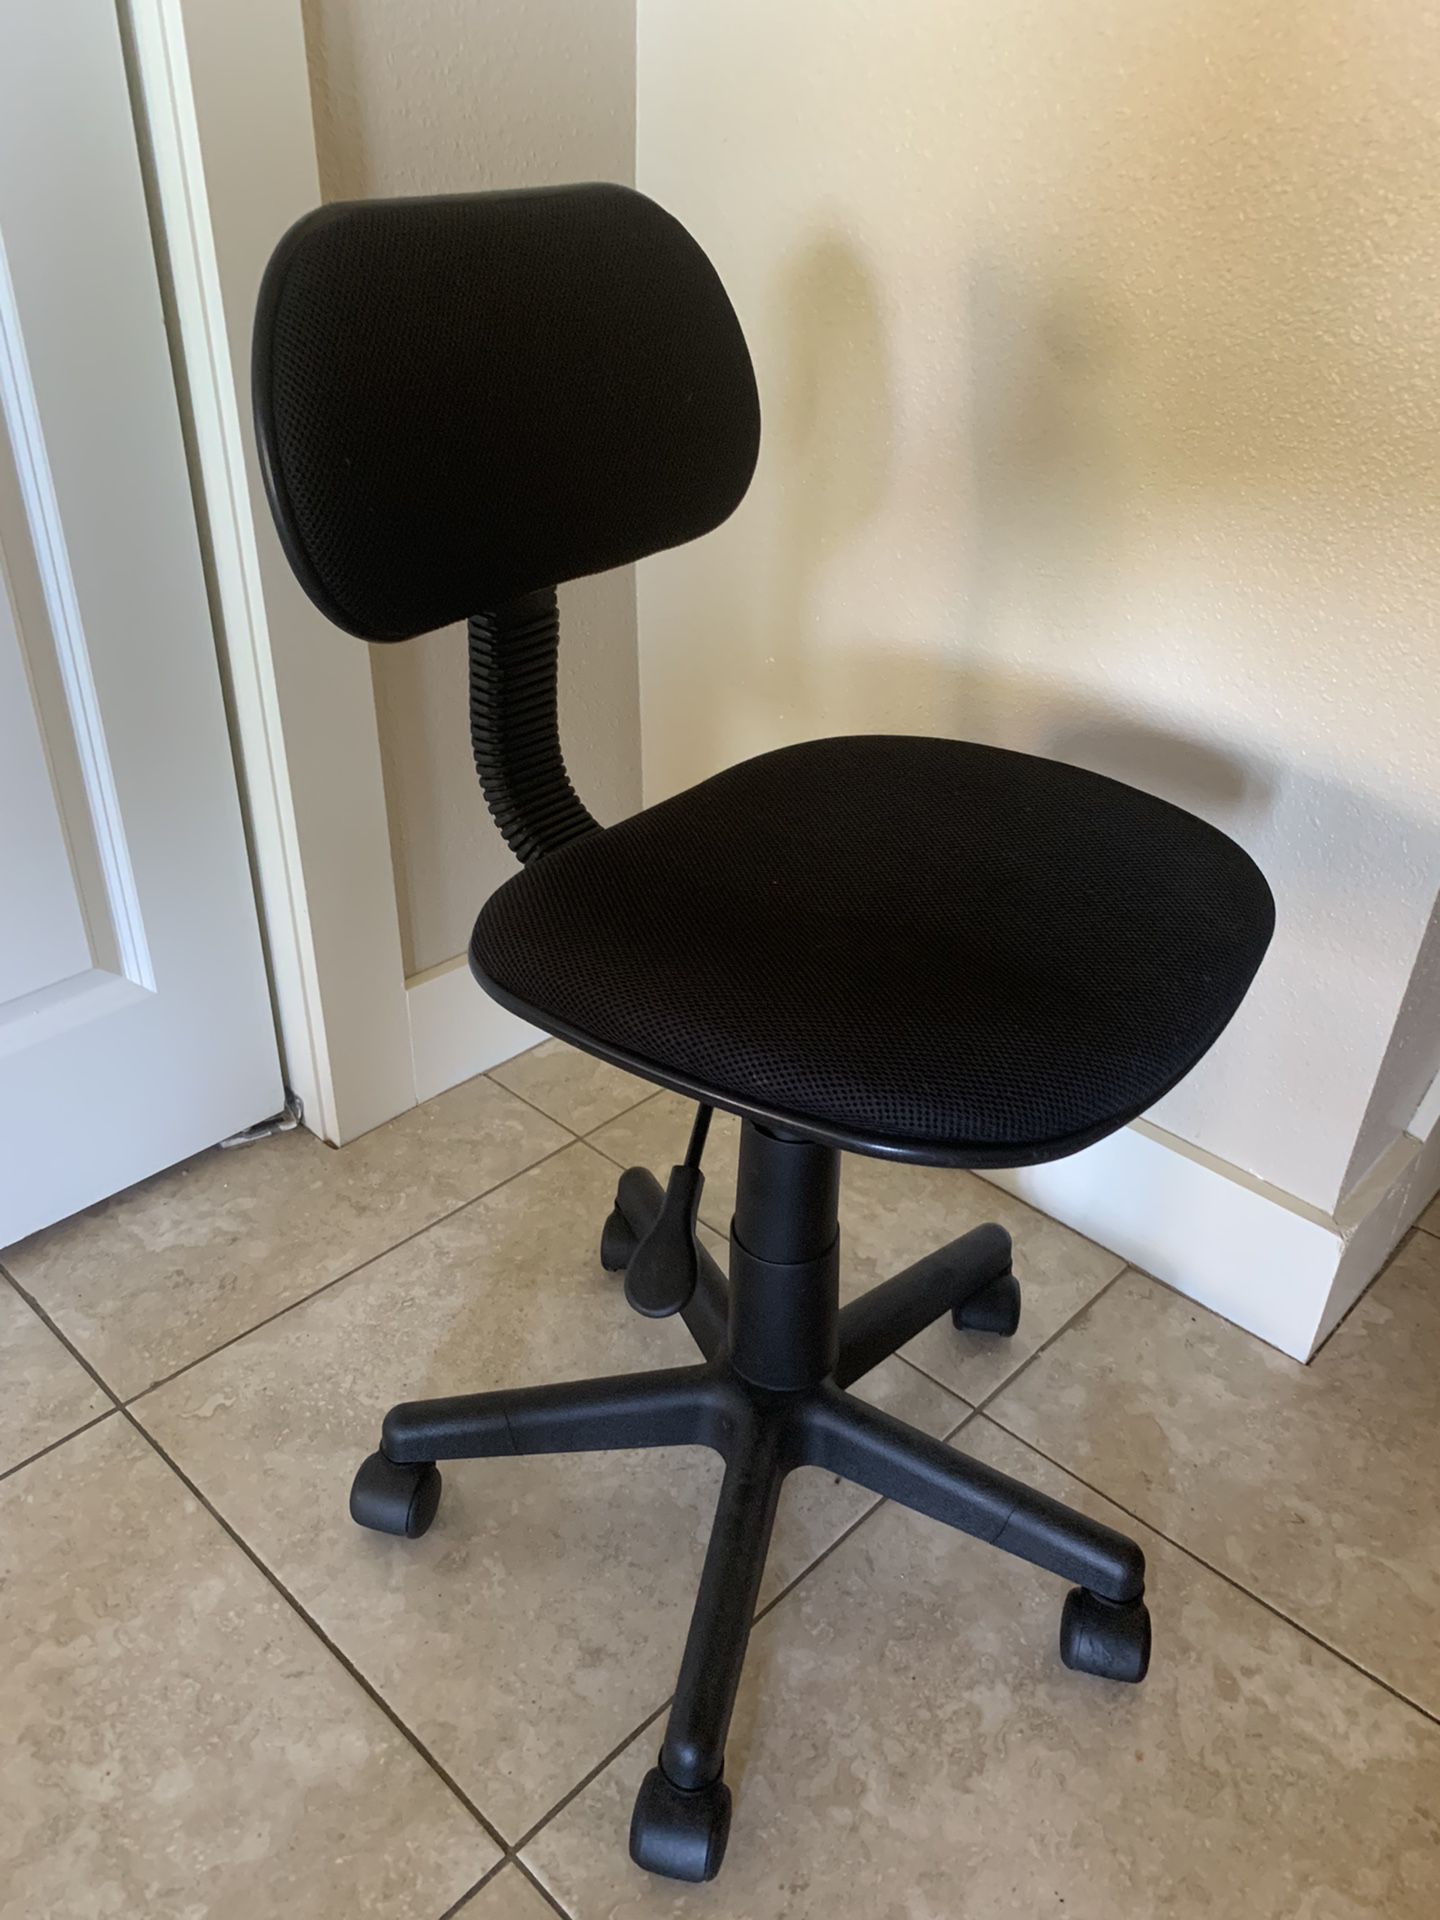 Desk Chair - $5